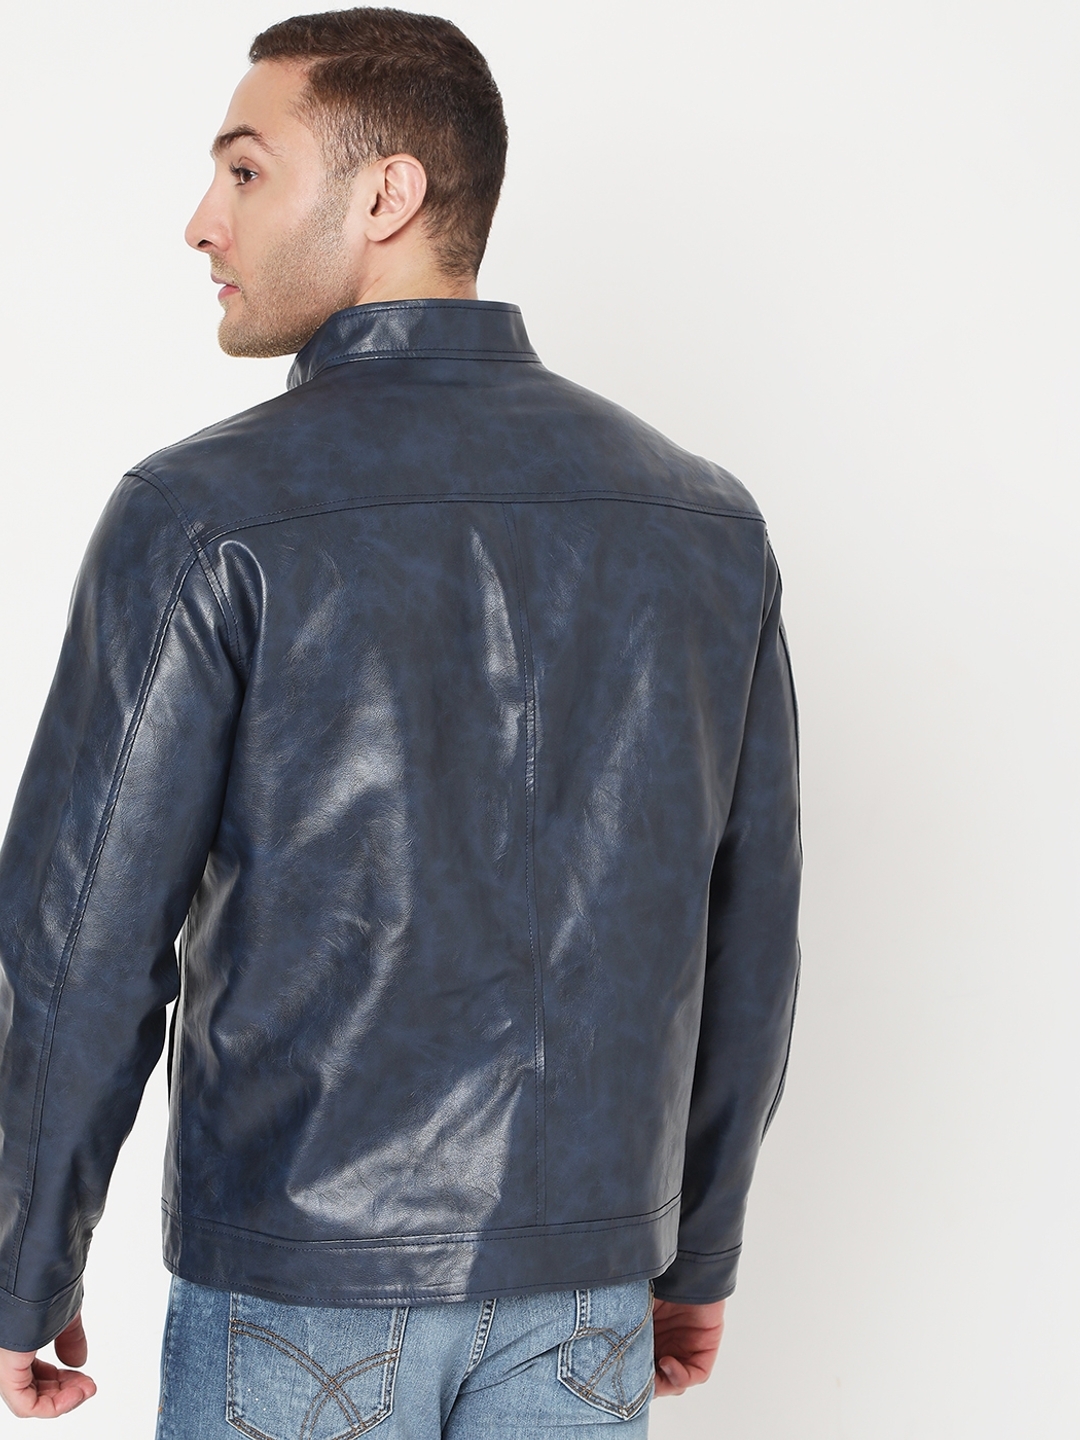 Clean Collared Steel Blue Jacket